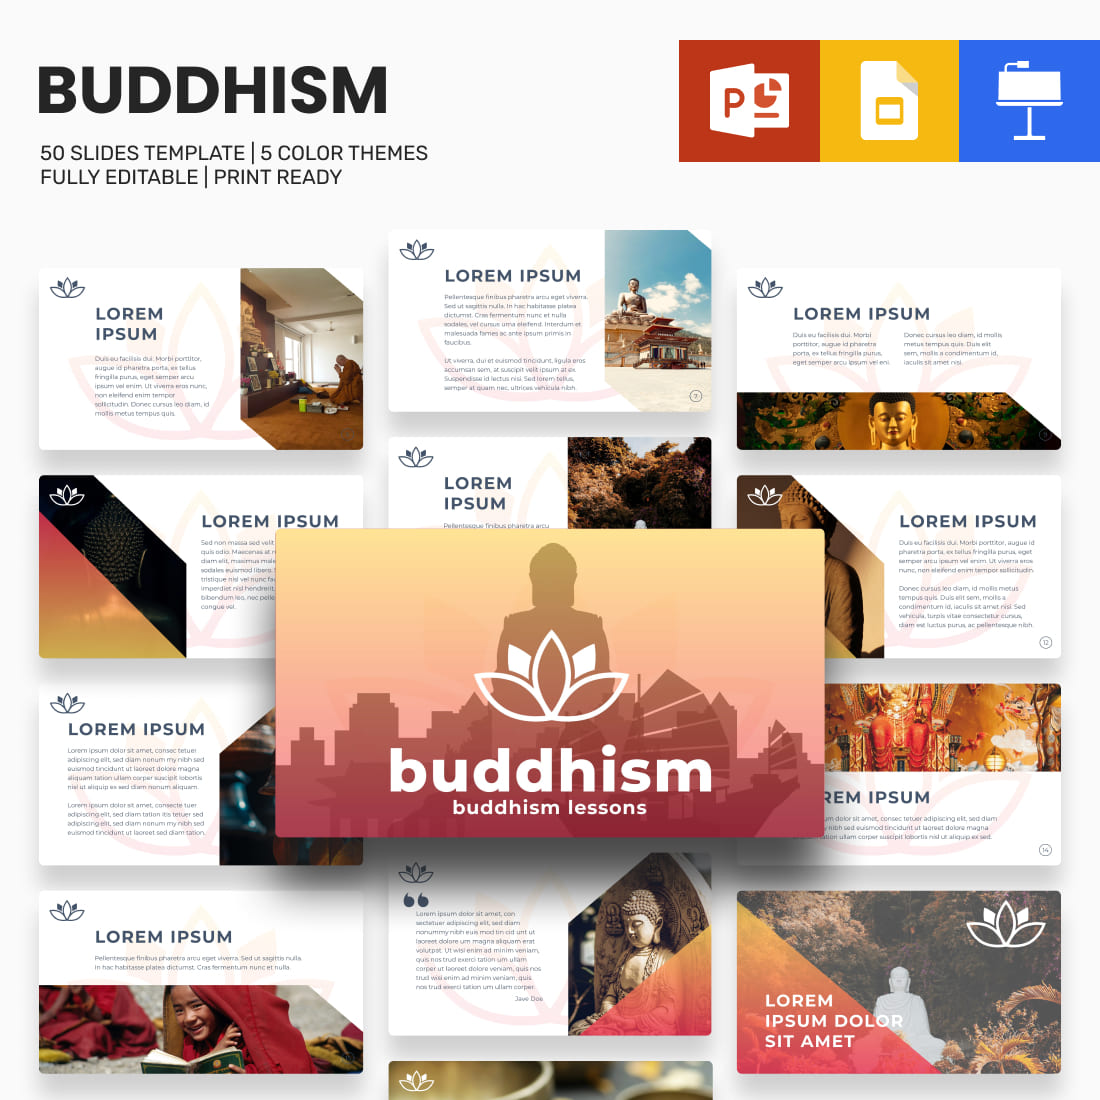 Buddhism presentation template.